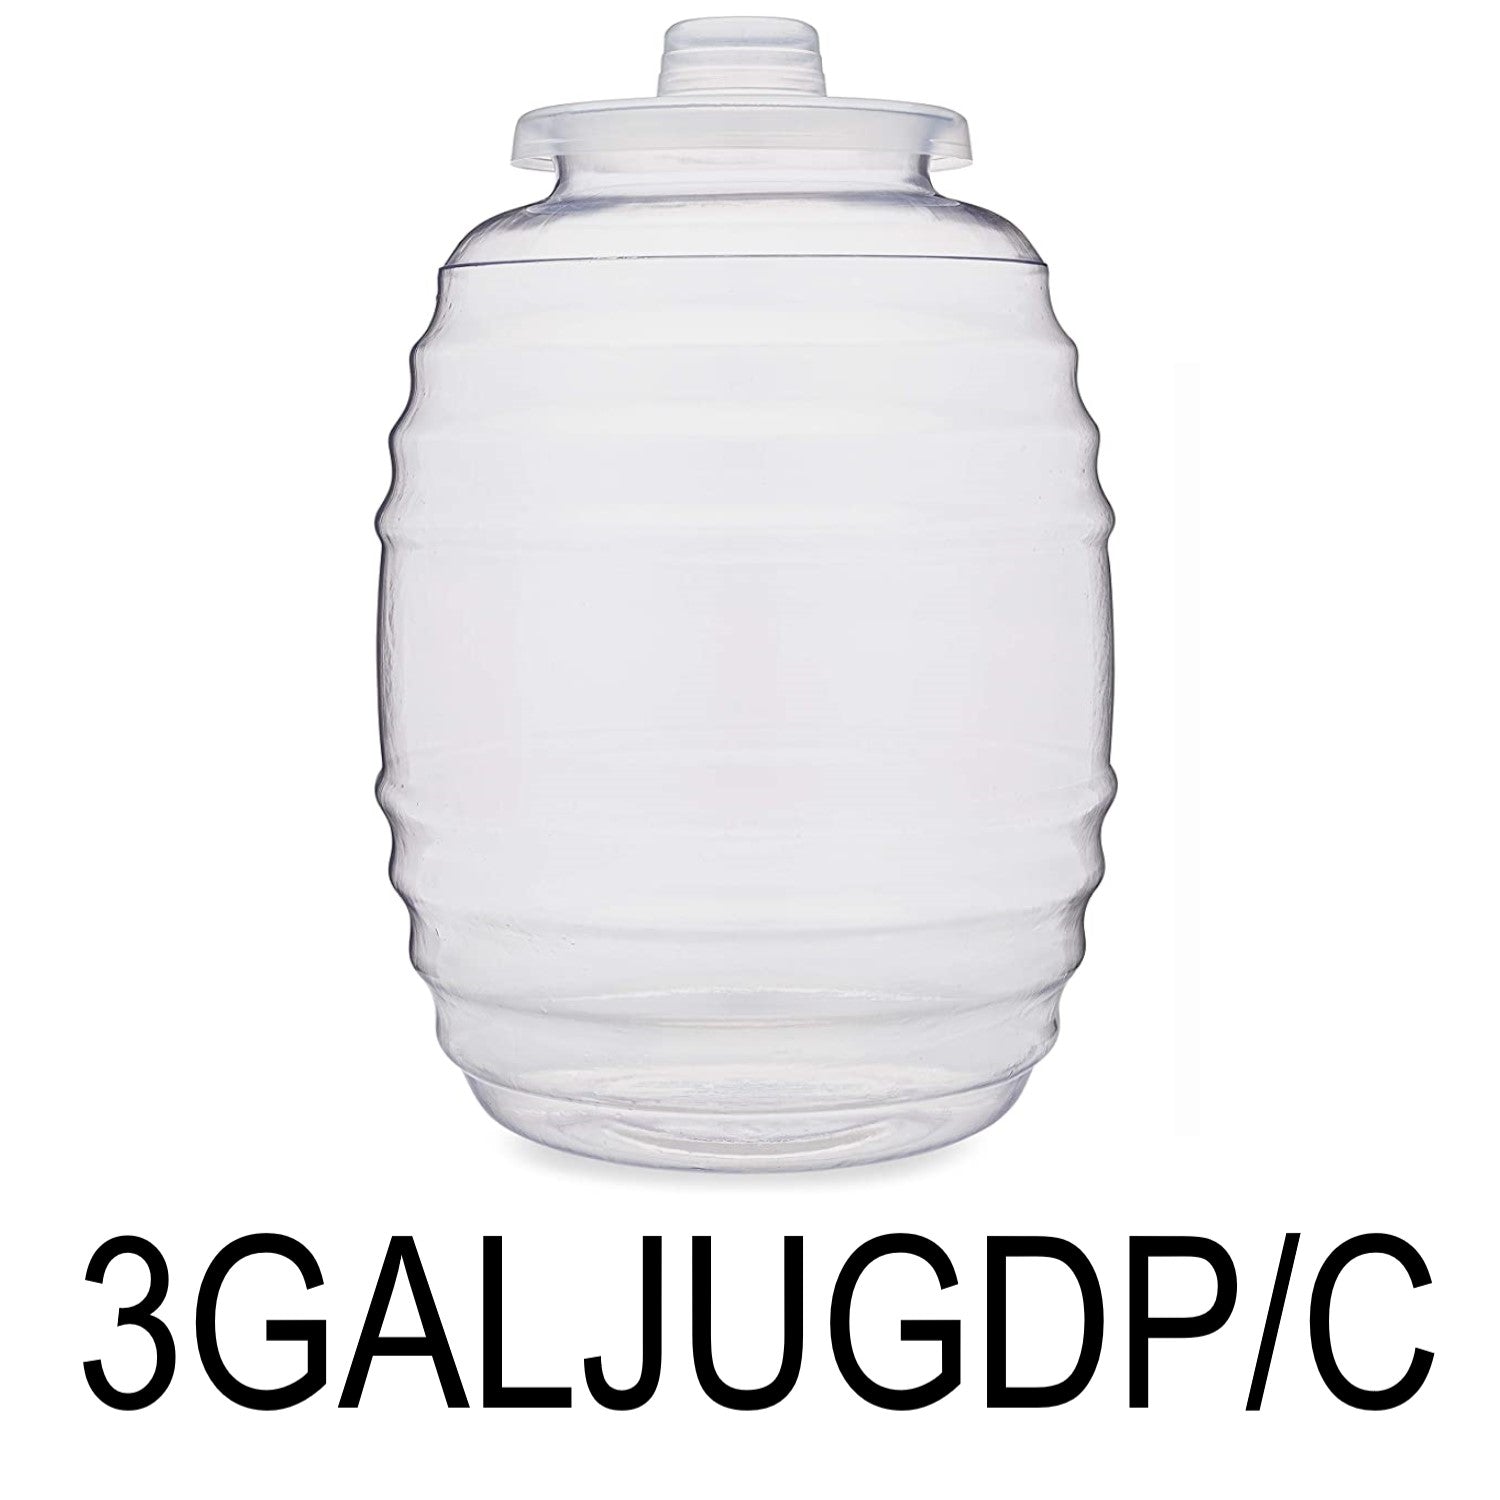 CHAMPS 5 Gallon Jug with Lid - Aguas Frescas Vitrolero Plastic